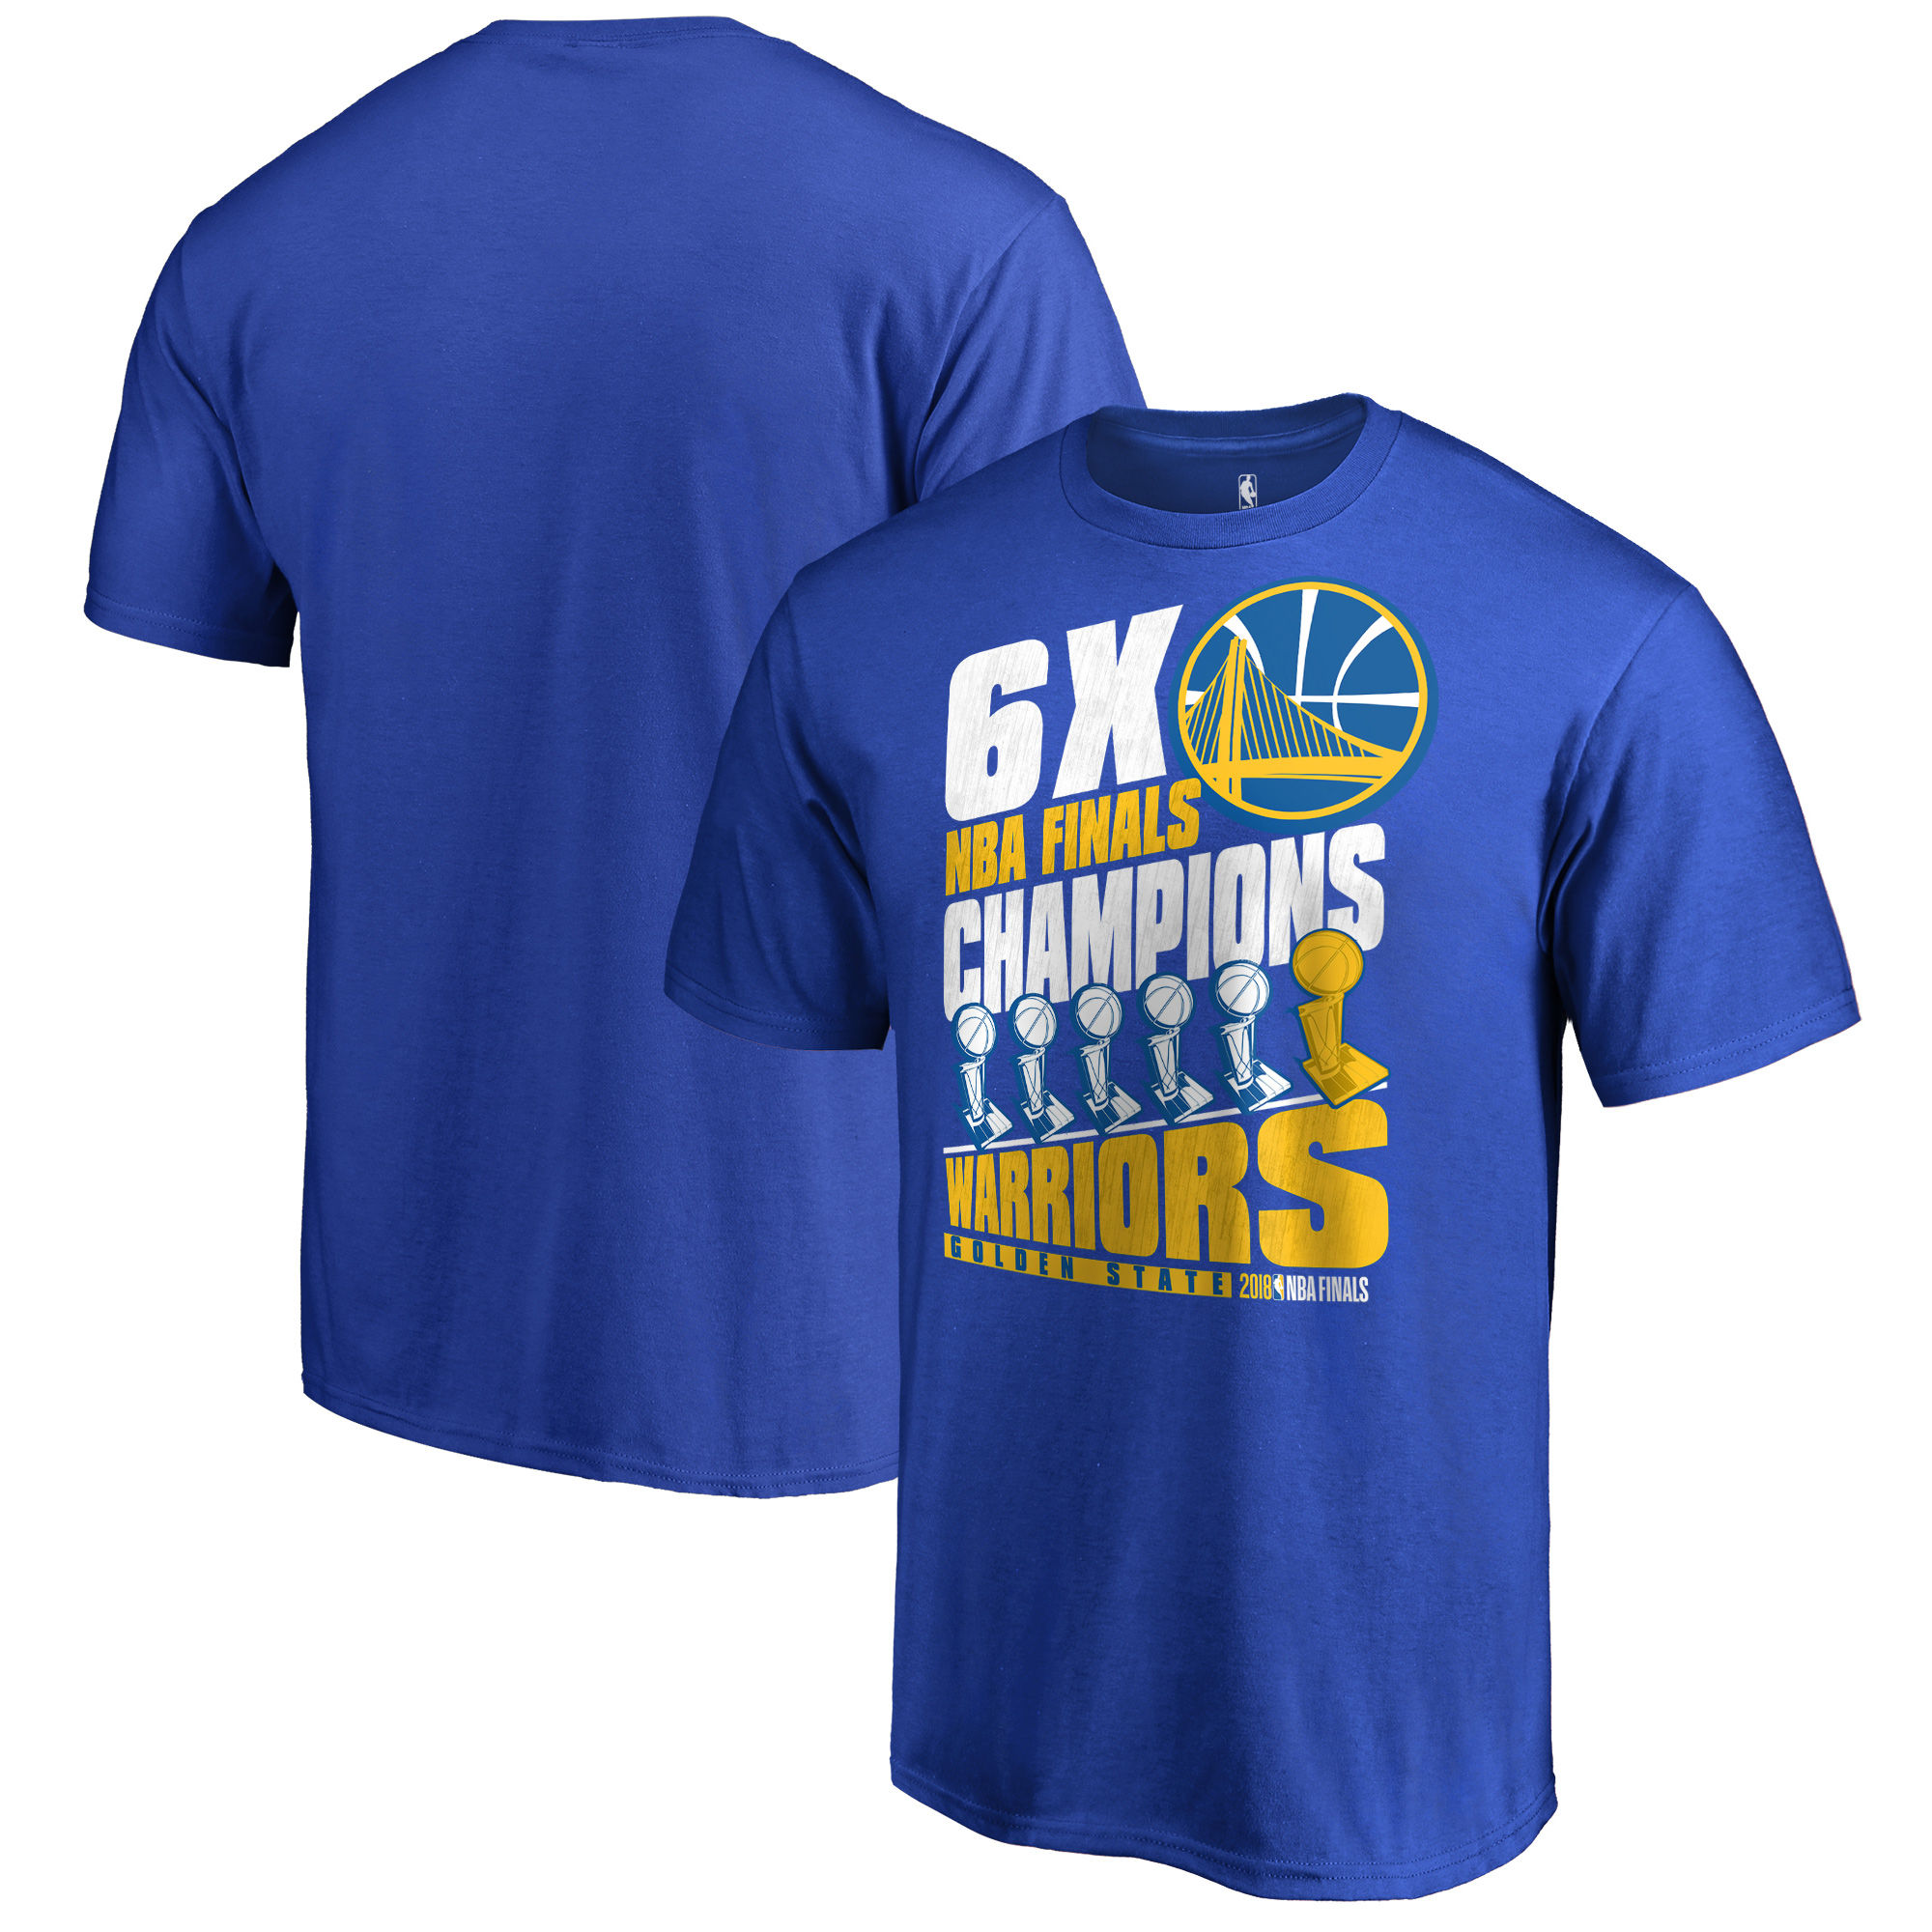 Golden State Warriors Fanatics Branded 2018 NBA Finals Champions Court Drillz 6 Time Champs T-Shirt Royal